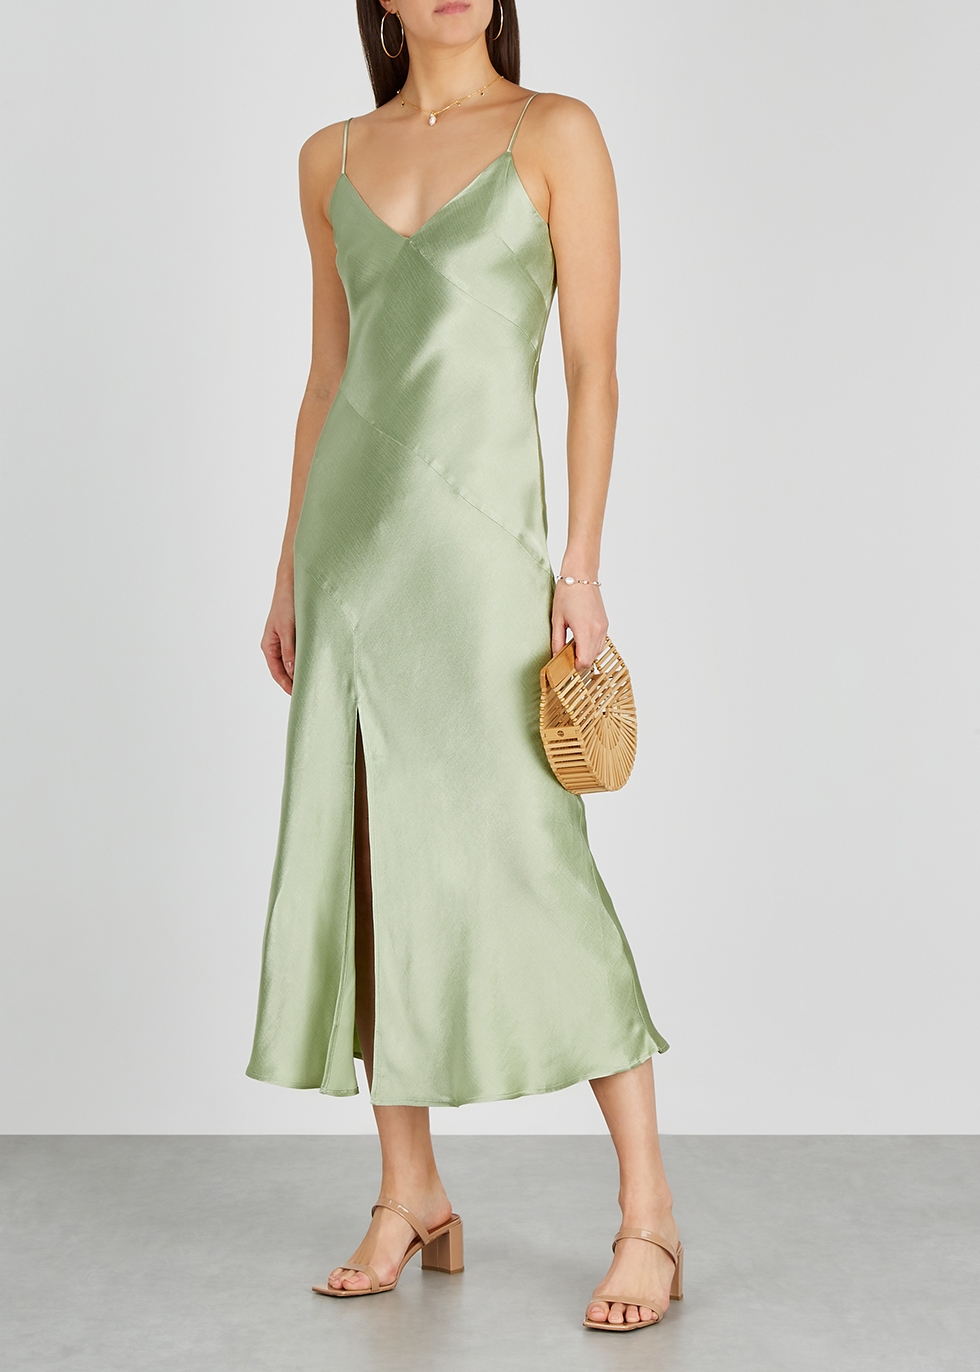 Light Green Satin Dress Top Sellers, UP ...